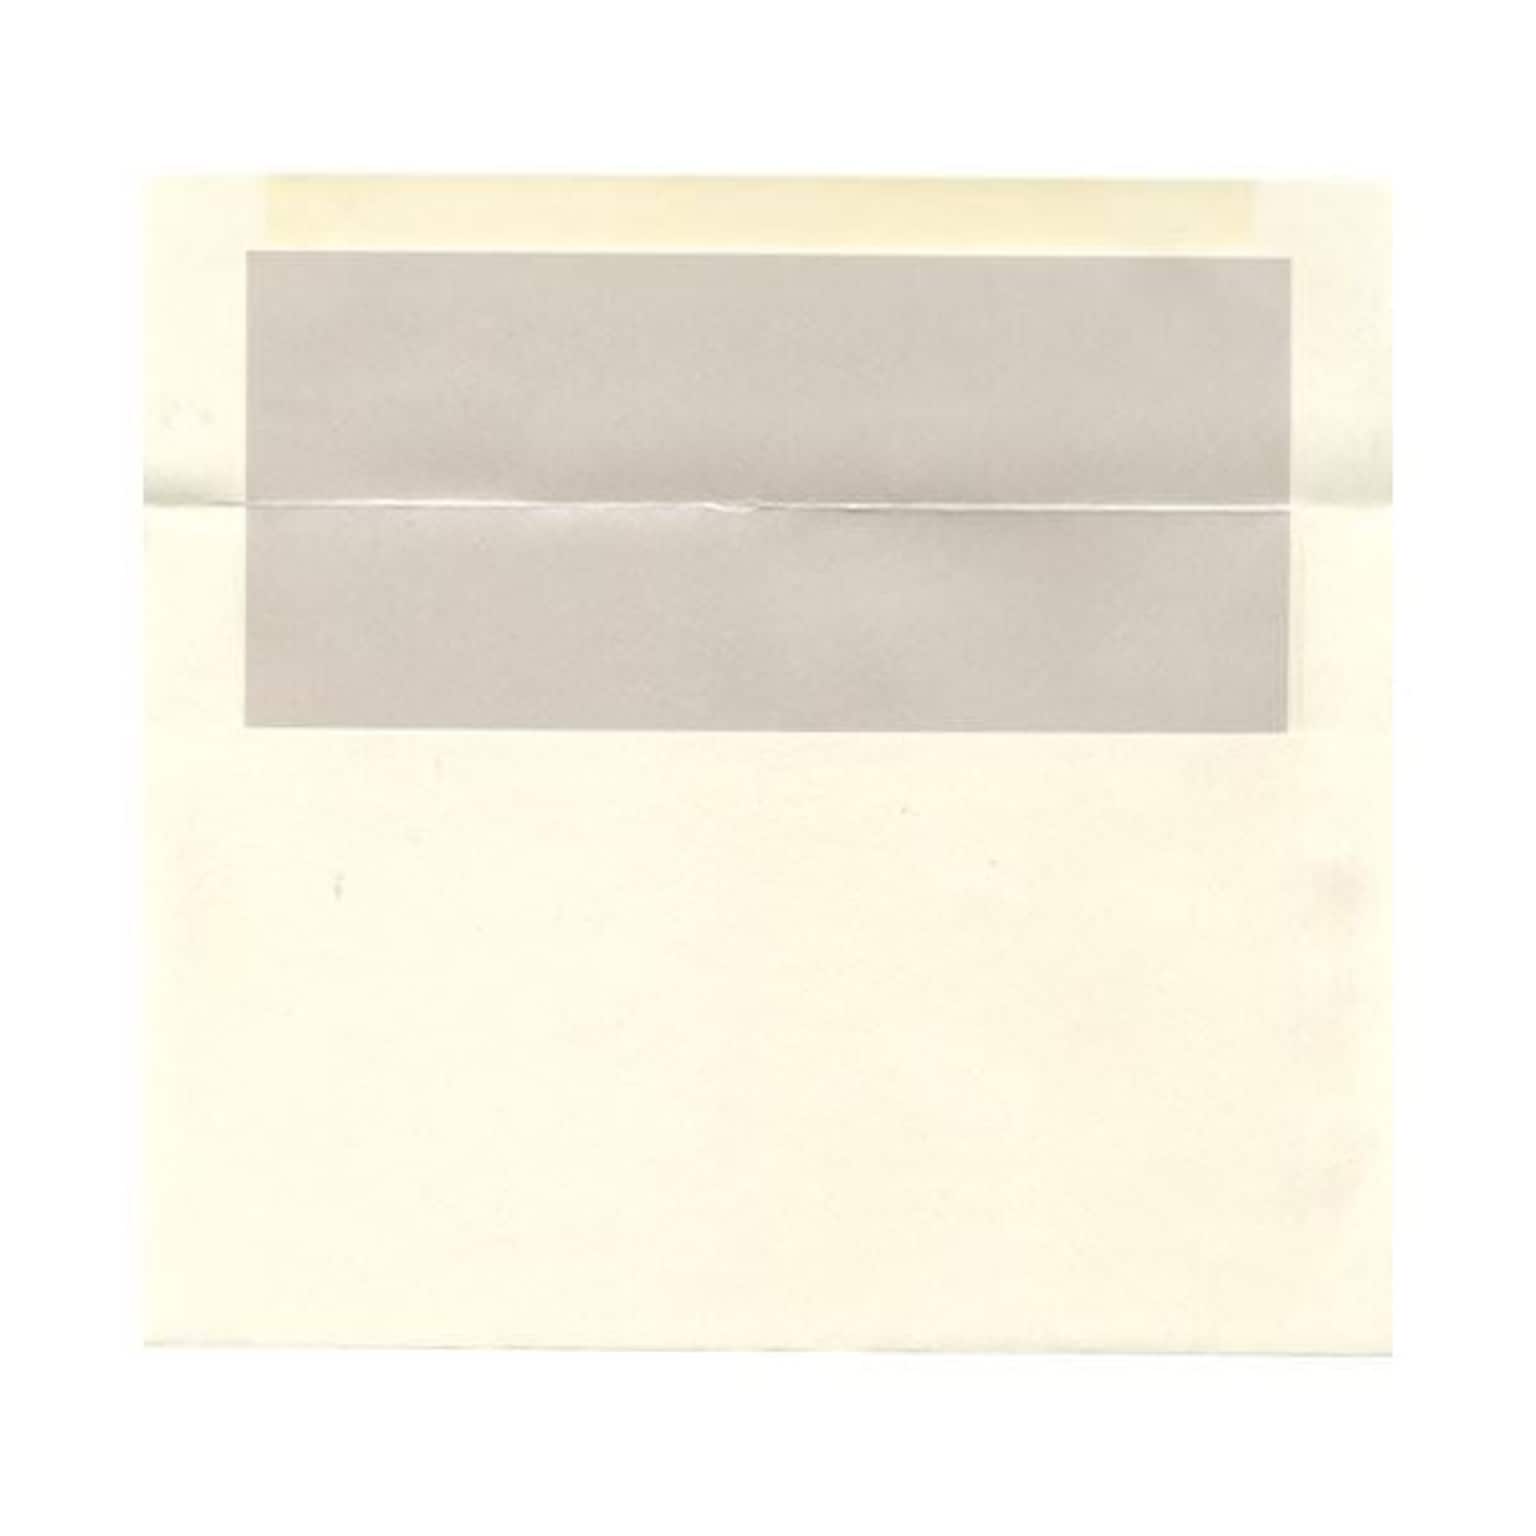 JAM Paper A9 Foil Lined Invitation Envelopes, 5.75 x 8.75, Ivory with Ivory Foil, Bulk 250/Box (532412544H)